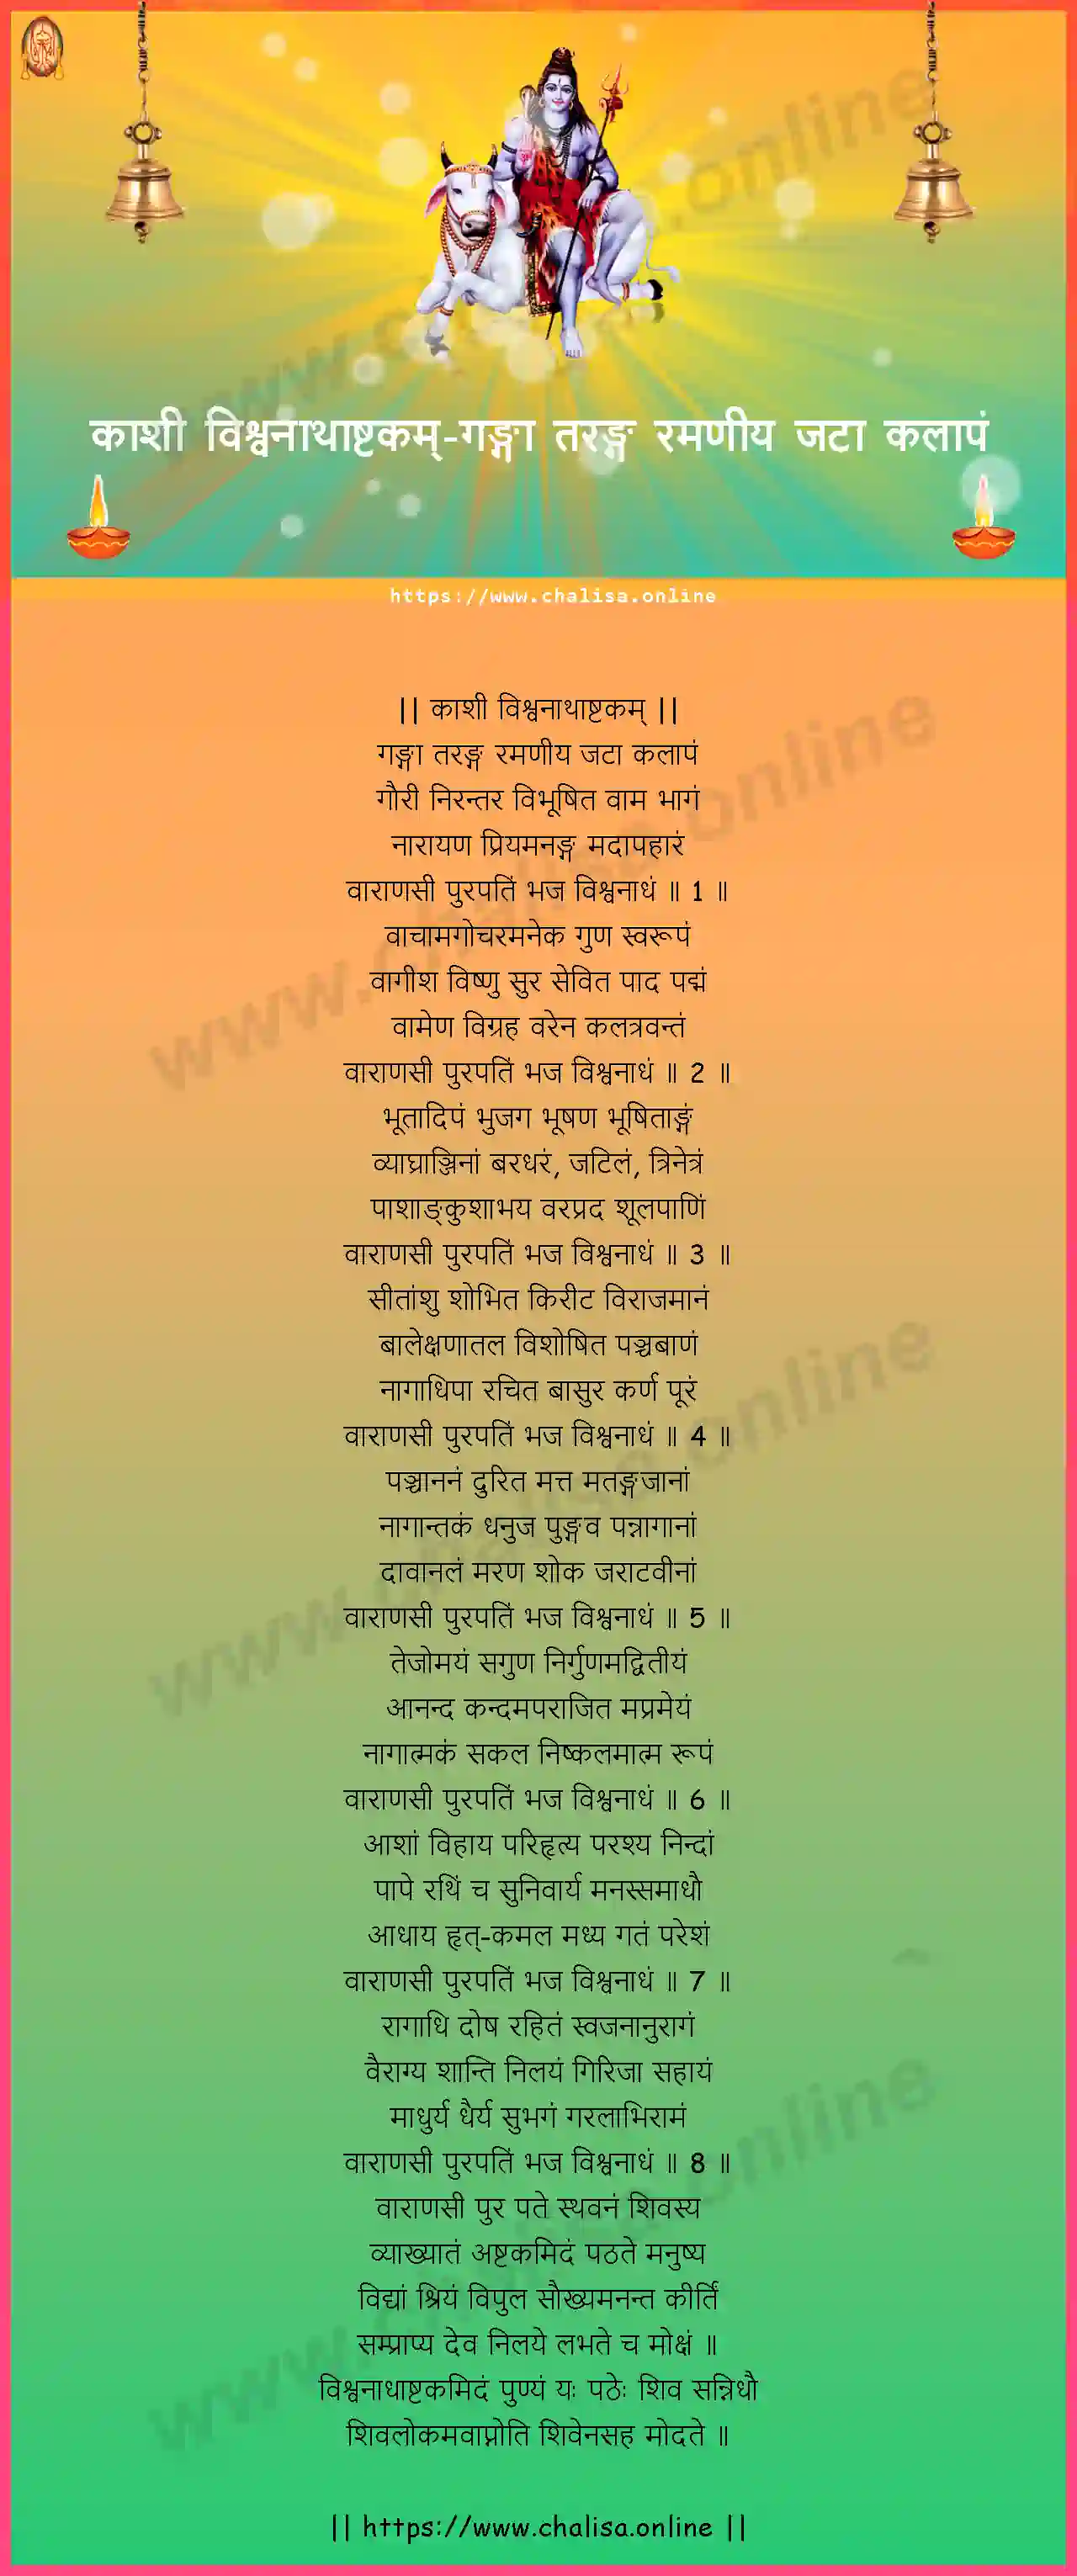 ganga-taranga-kasi-vishwanathashtakam-devanagari-devanagari-lyrics-download